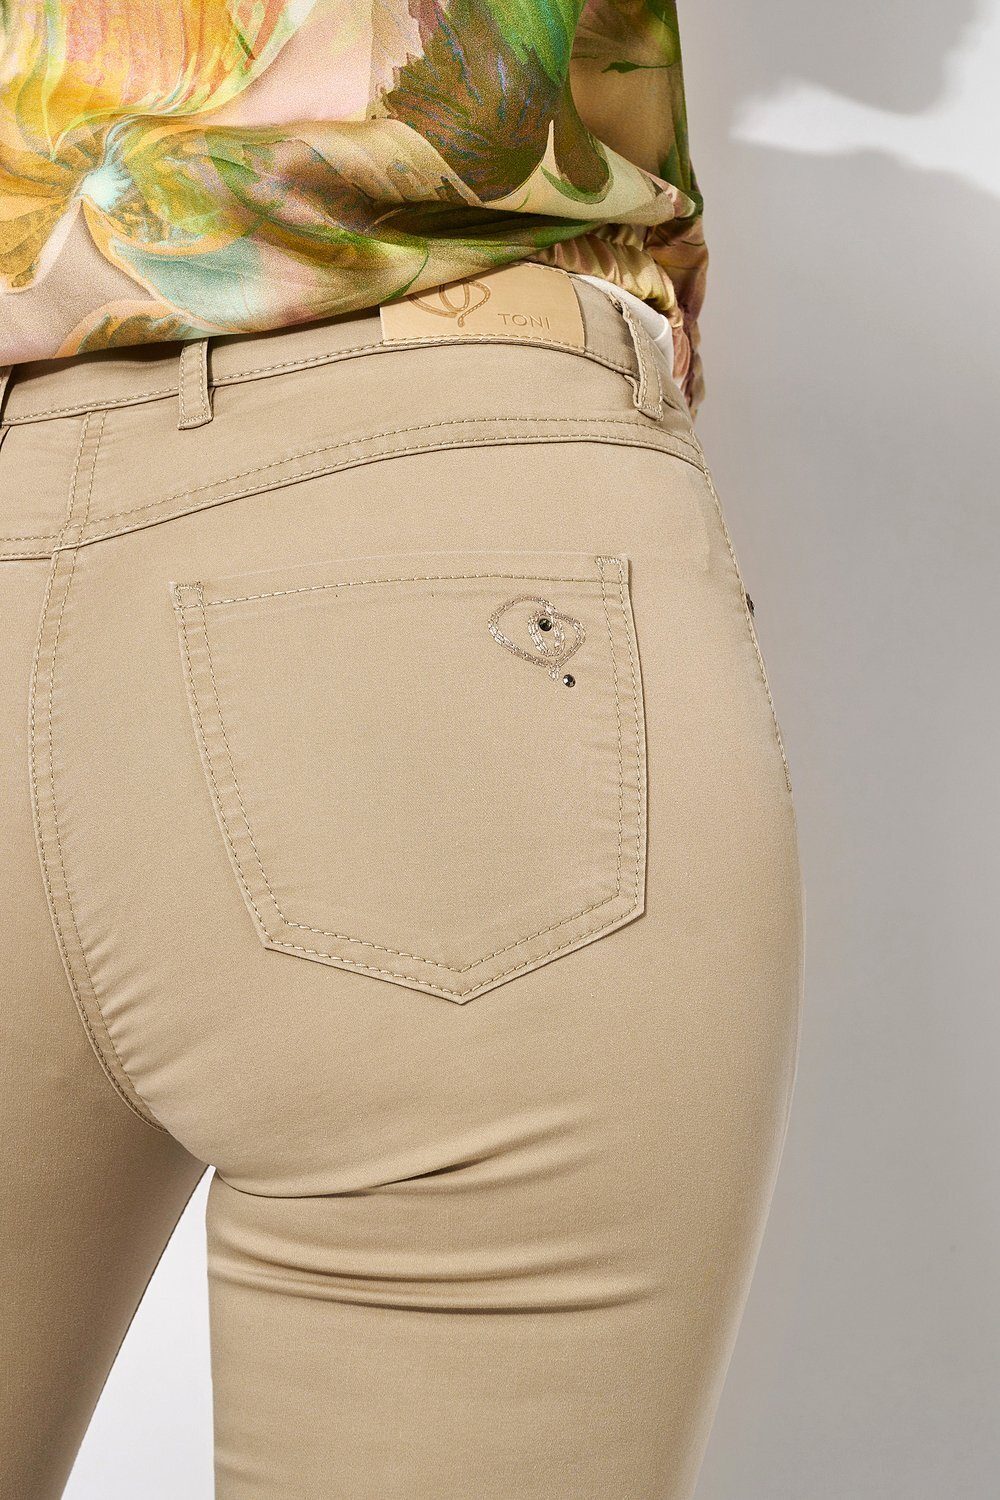 softer Baumwolle beige 072 - aus Shape 5-Pocket-Hose TONI Perfect